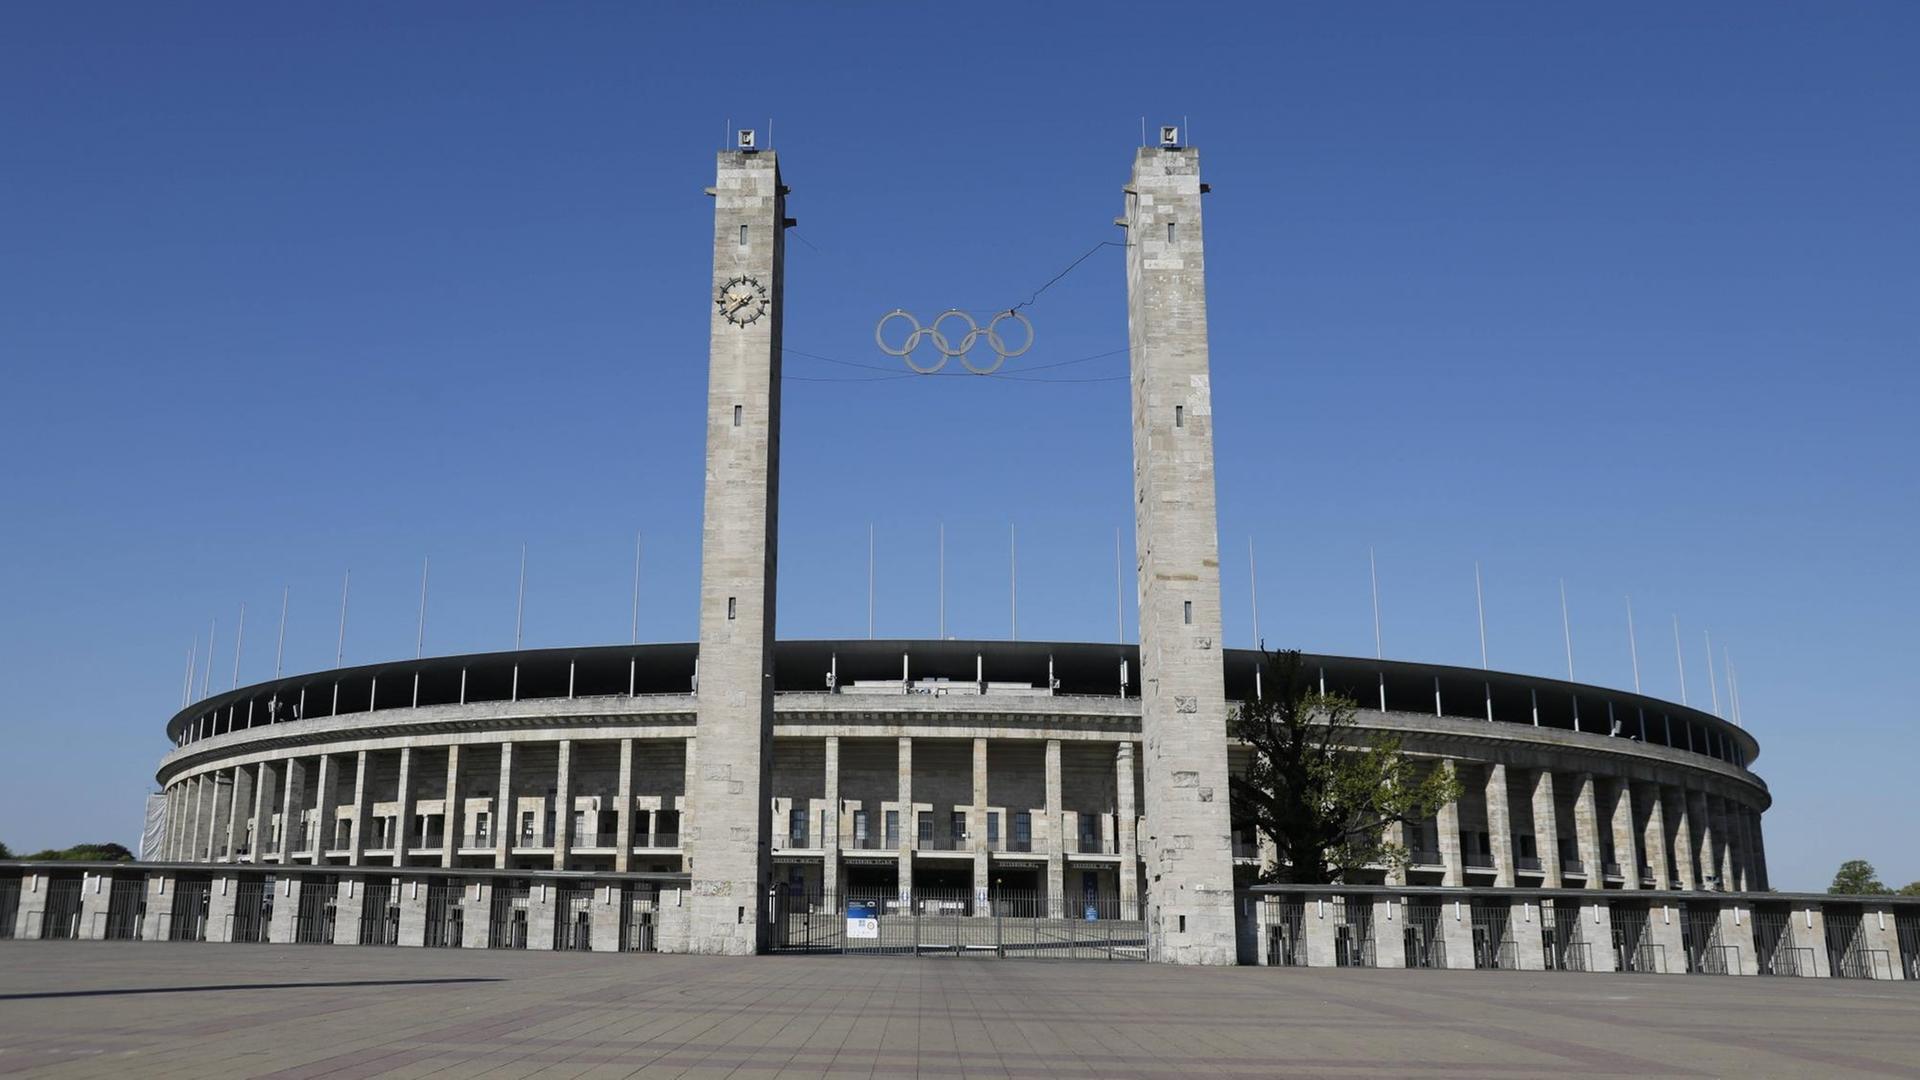 Frontalansicht des Olympiastadions in Berlin.